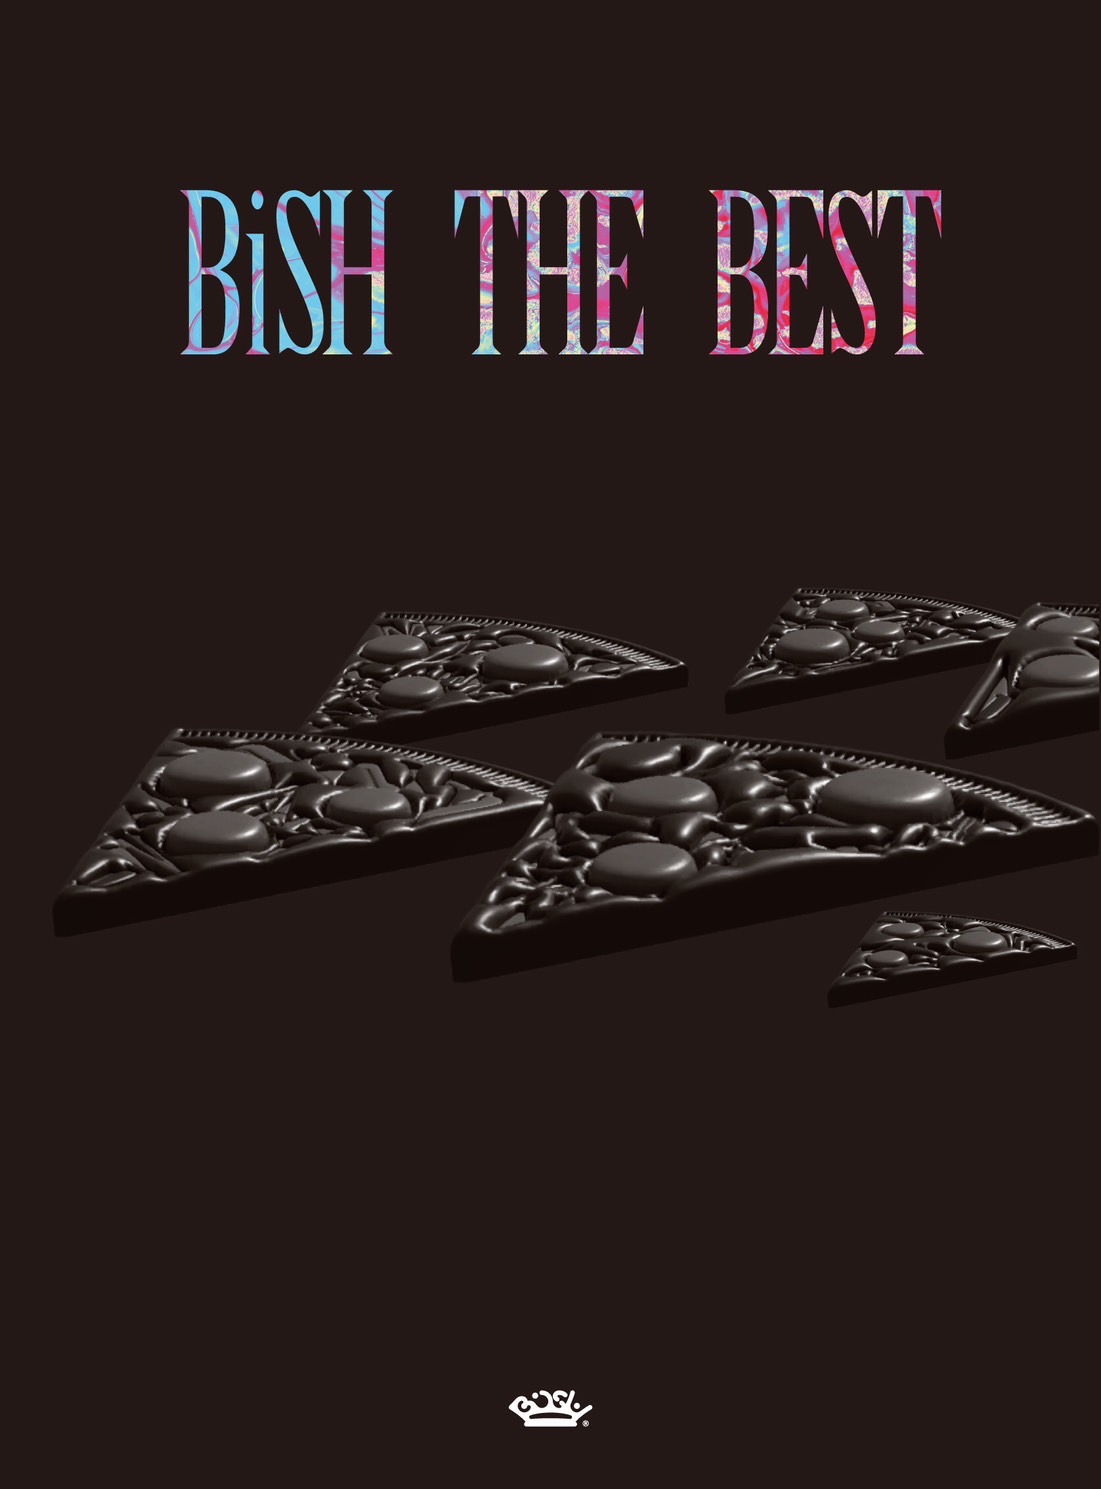 BiSH THE BEST | WACKi Wiki | Fandom